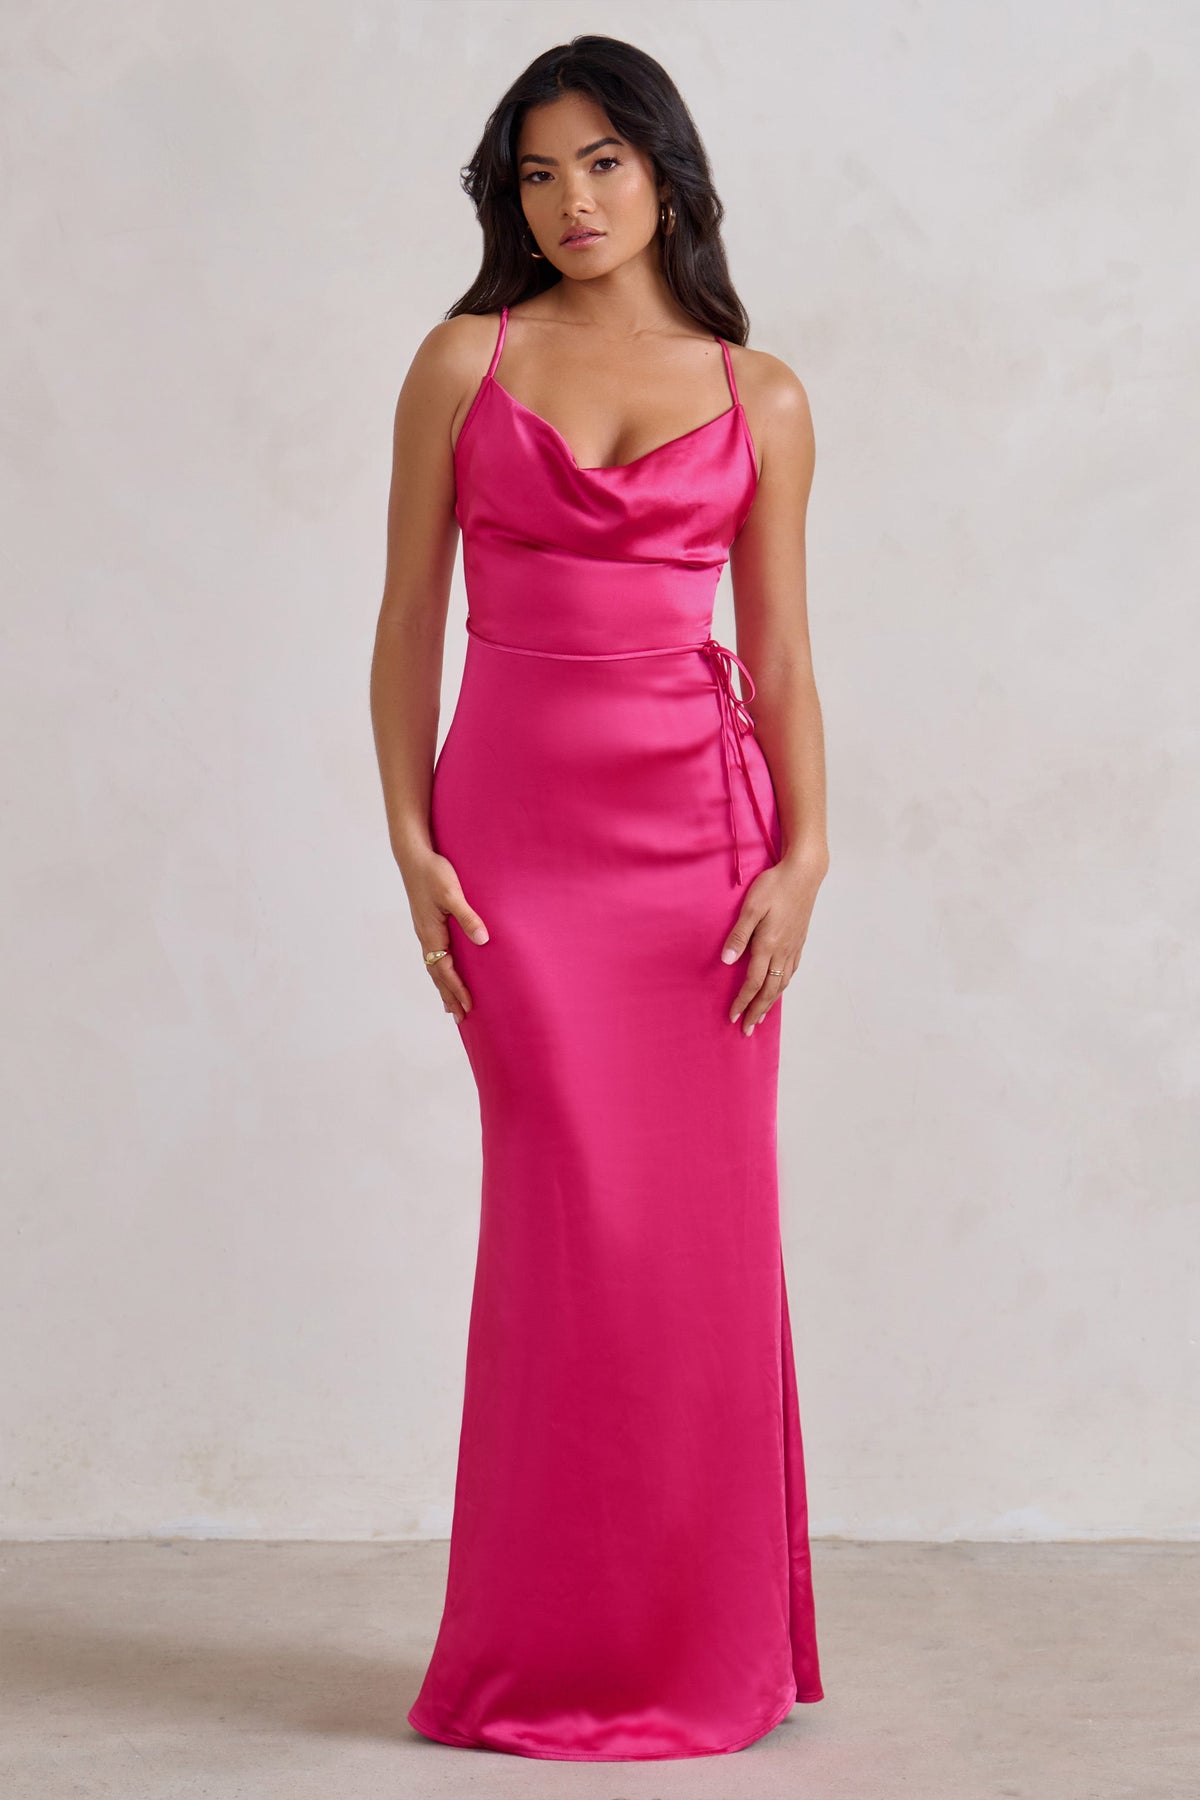 Fuchsia Dress - One-Shoulder Bodycon - Pink Bodycon Dress - Lulus